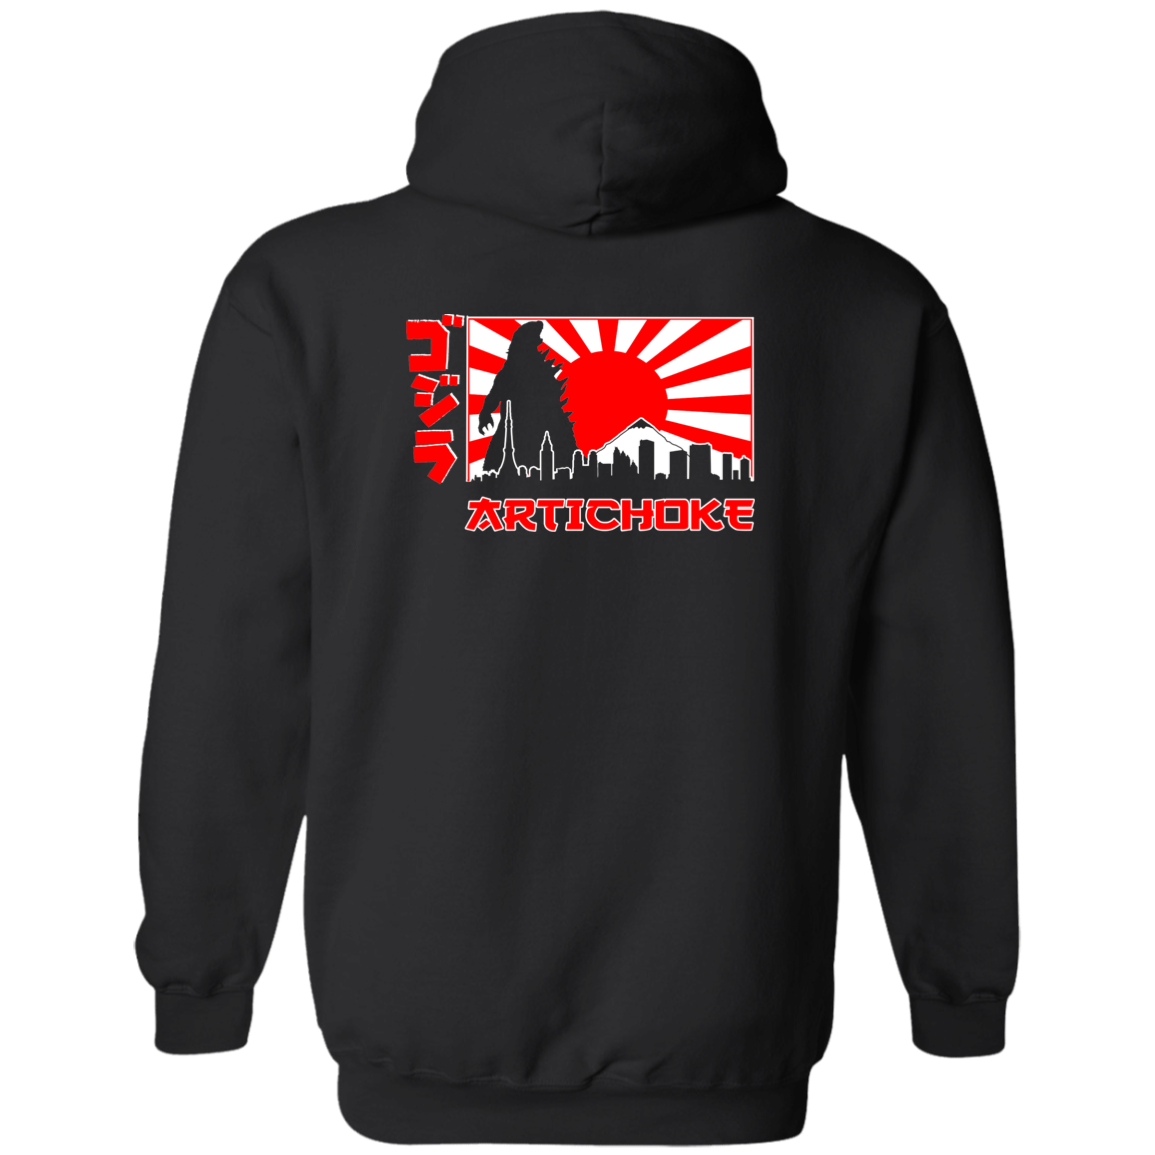 ArtichokeUSA Custom Design.  Fan Art Godzilla/Mecha Godzilla. Zip Up Hooded Sweatshirt